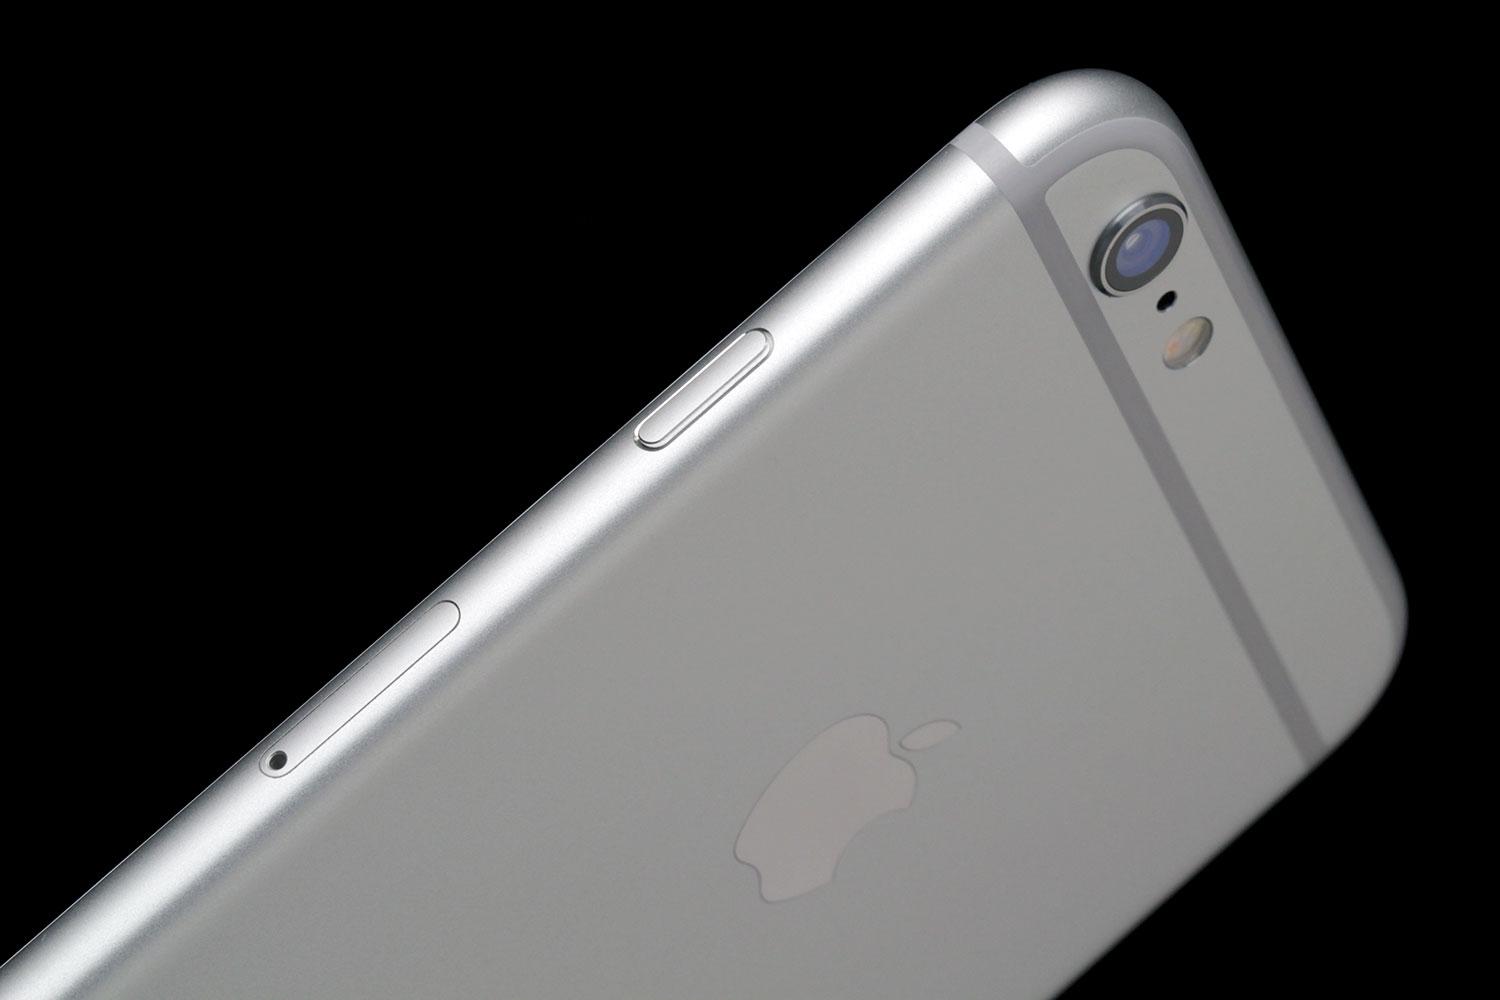 iPhone 6 Plus Space Grey  Iphone gadgets, Iphone, Apple smartphone